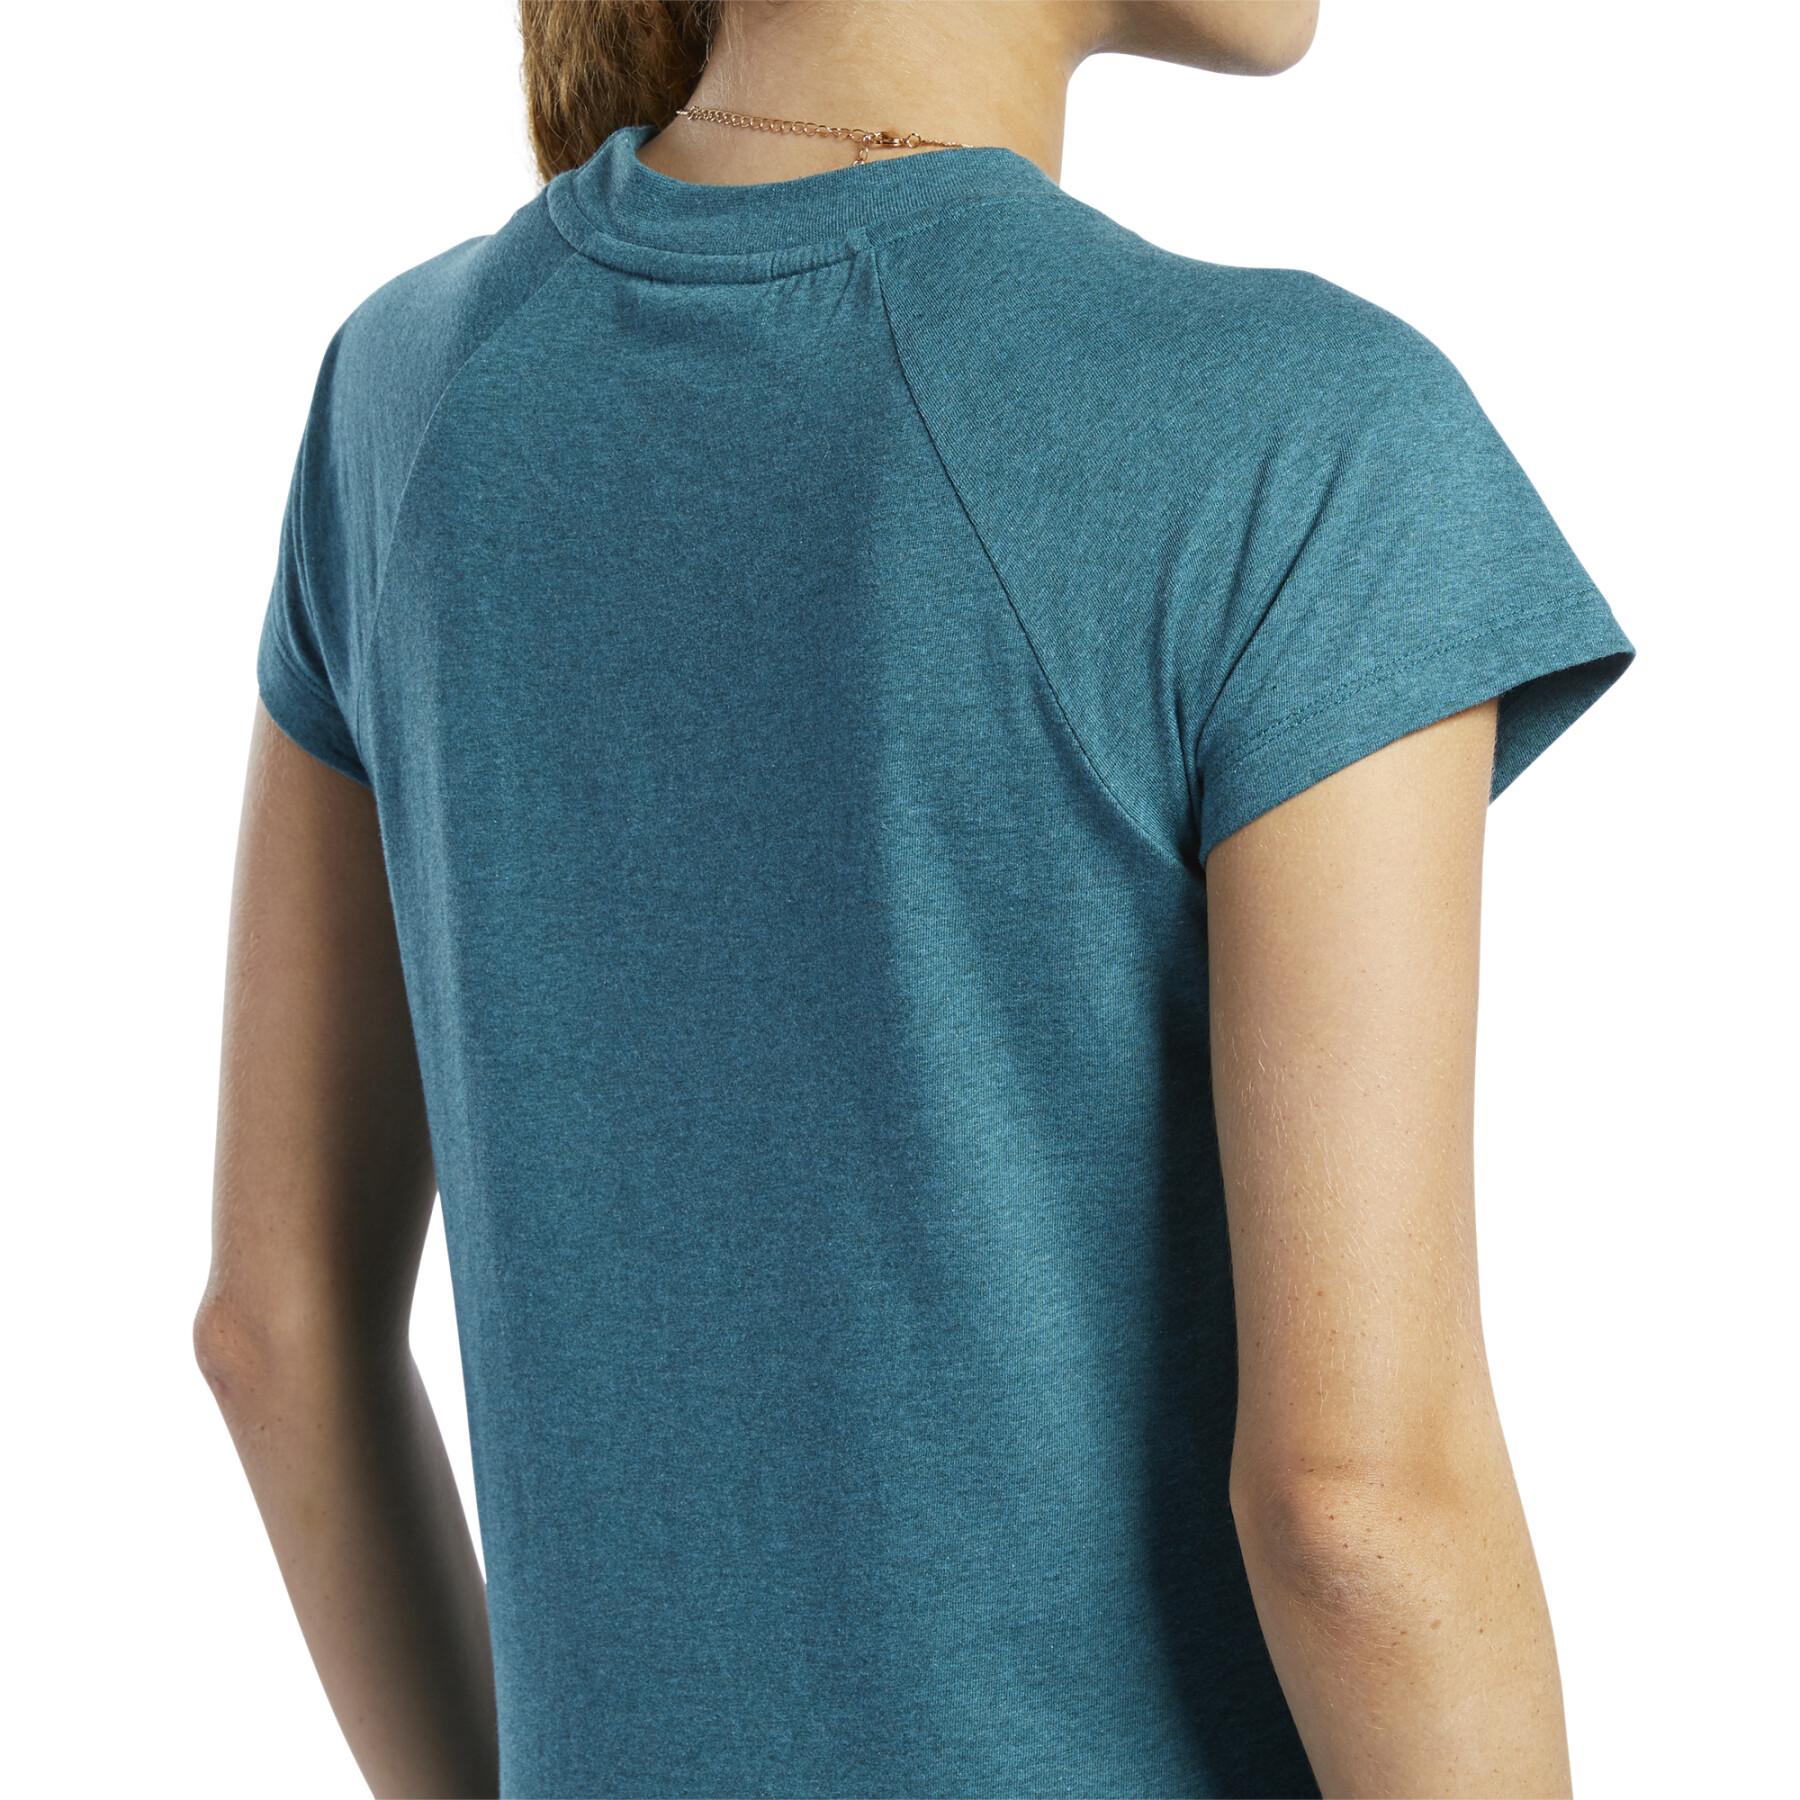 Frauen-T-Shirt Reebok Essentials Logo